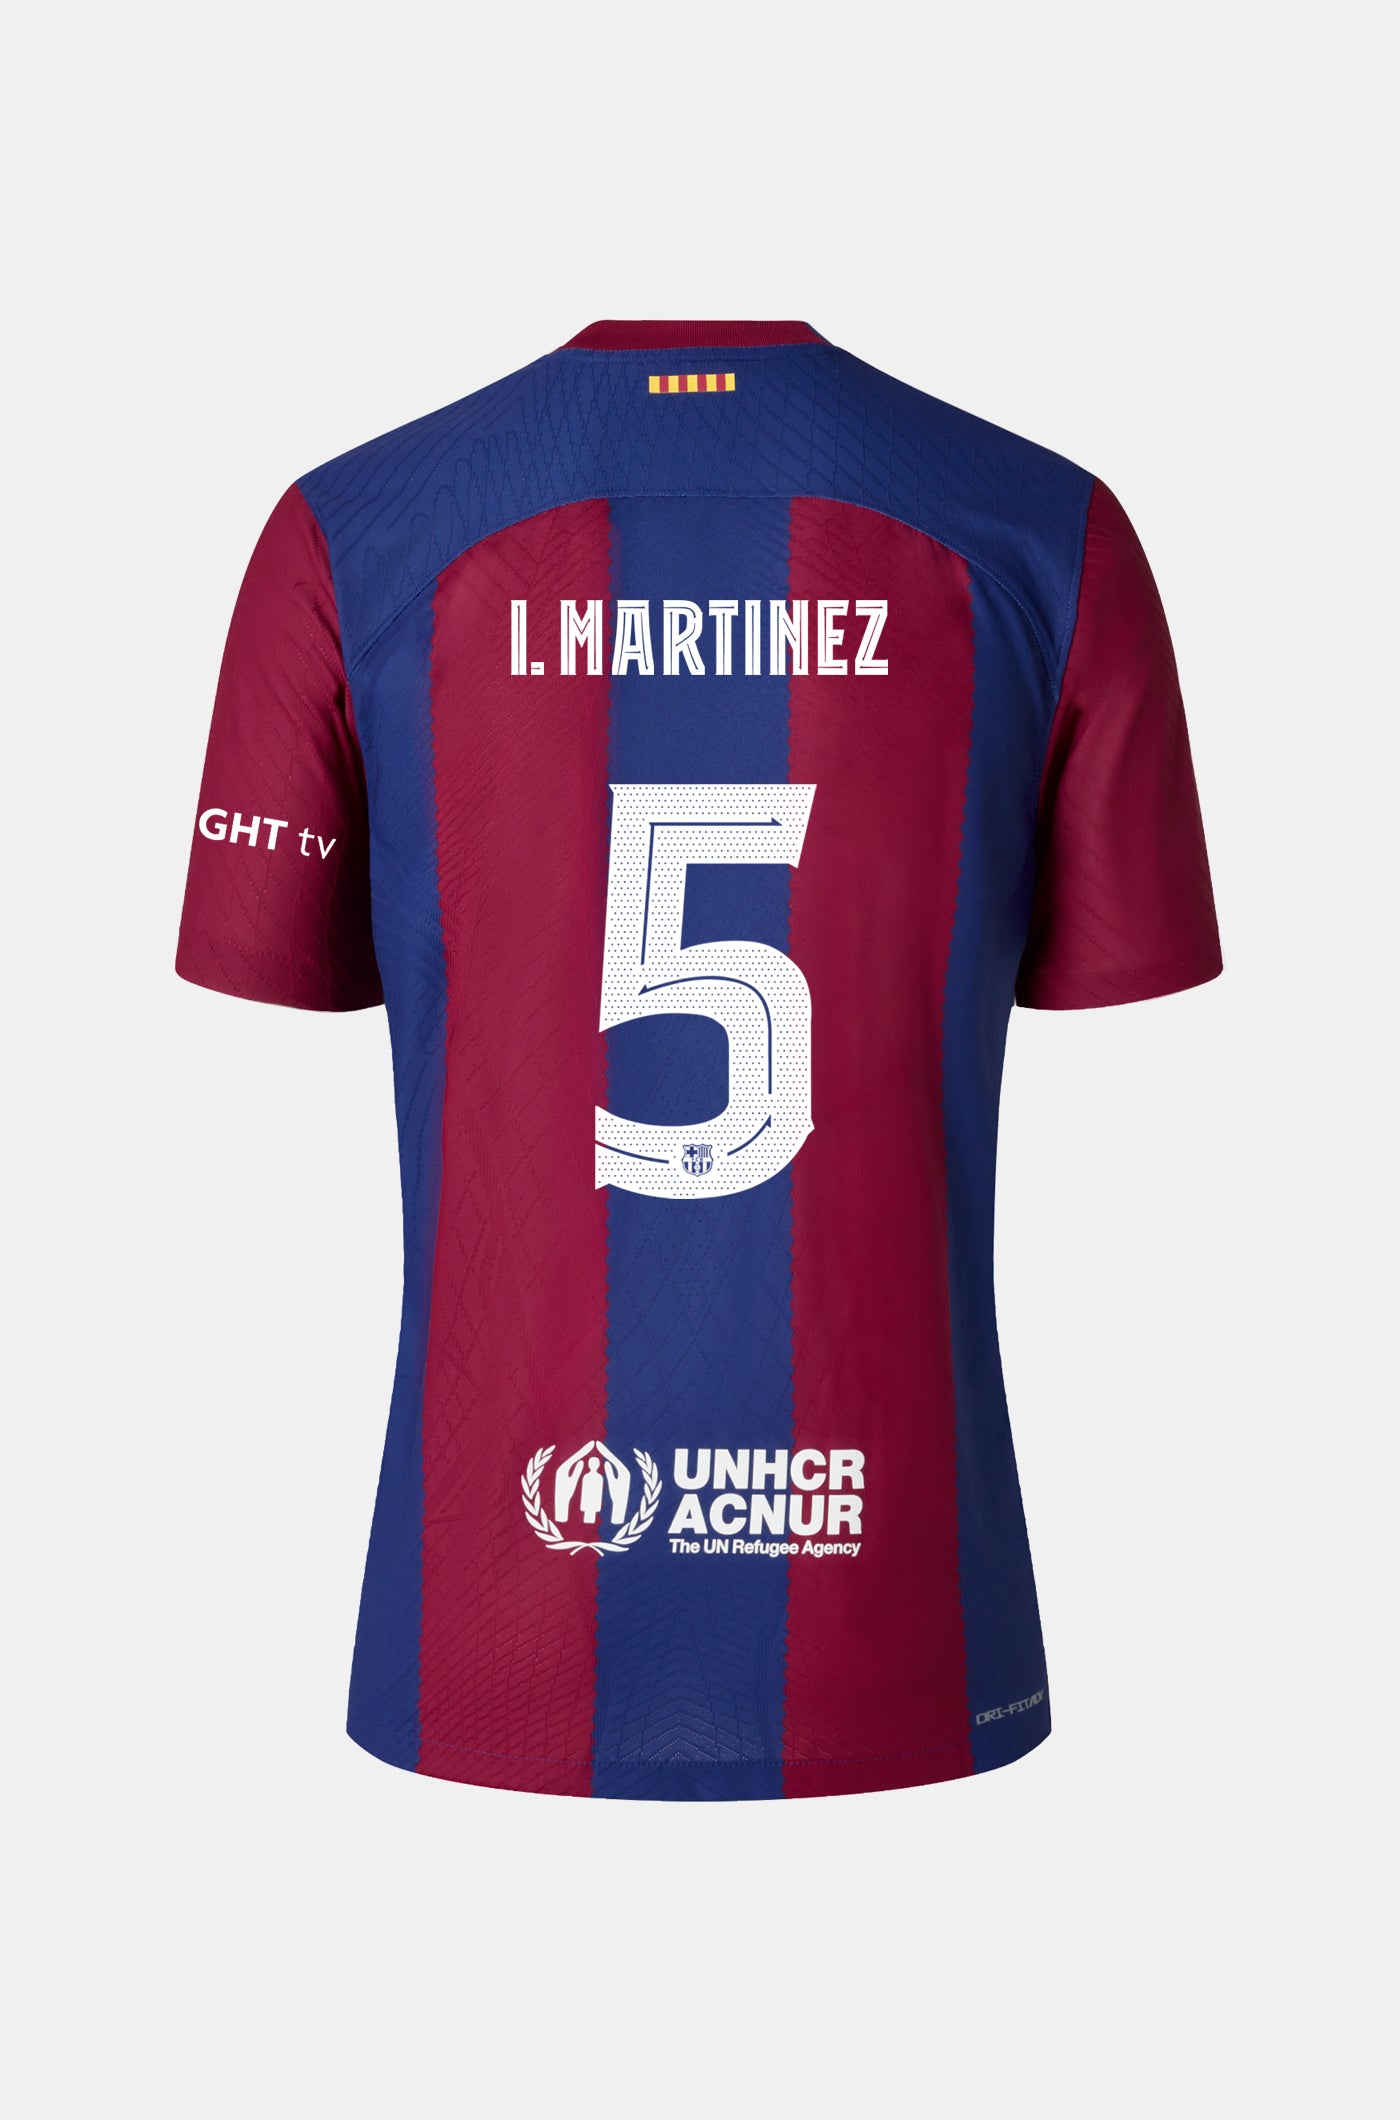 FC Barcelona home shirt 23/24 - Long-sleeve Player's Edition - I. MARTÍNEZ